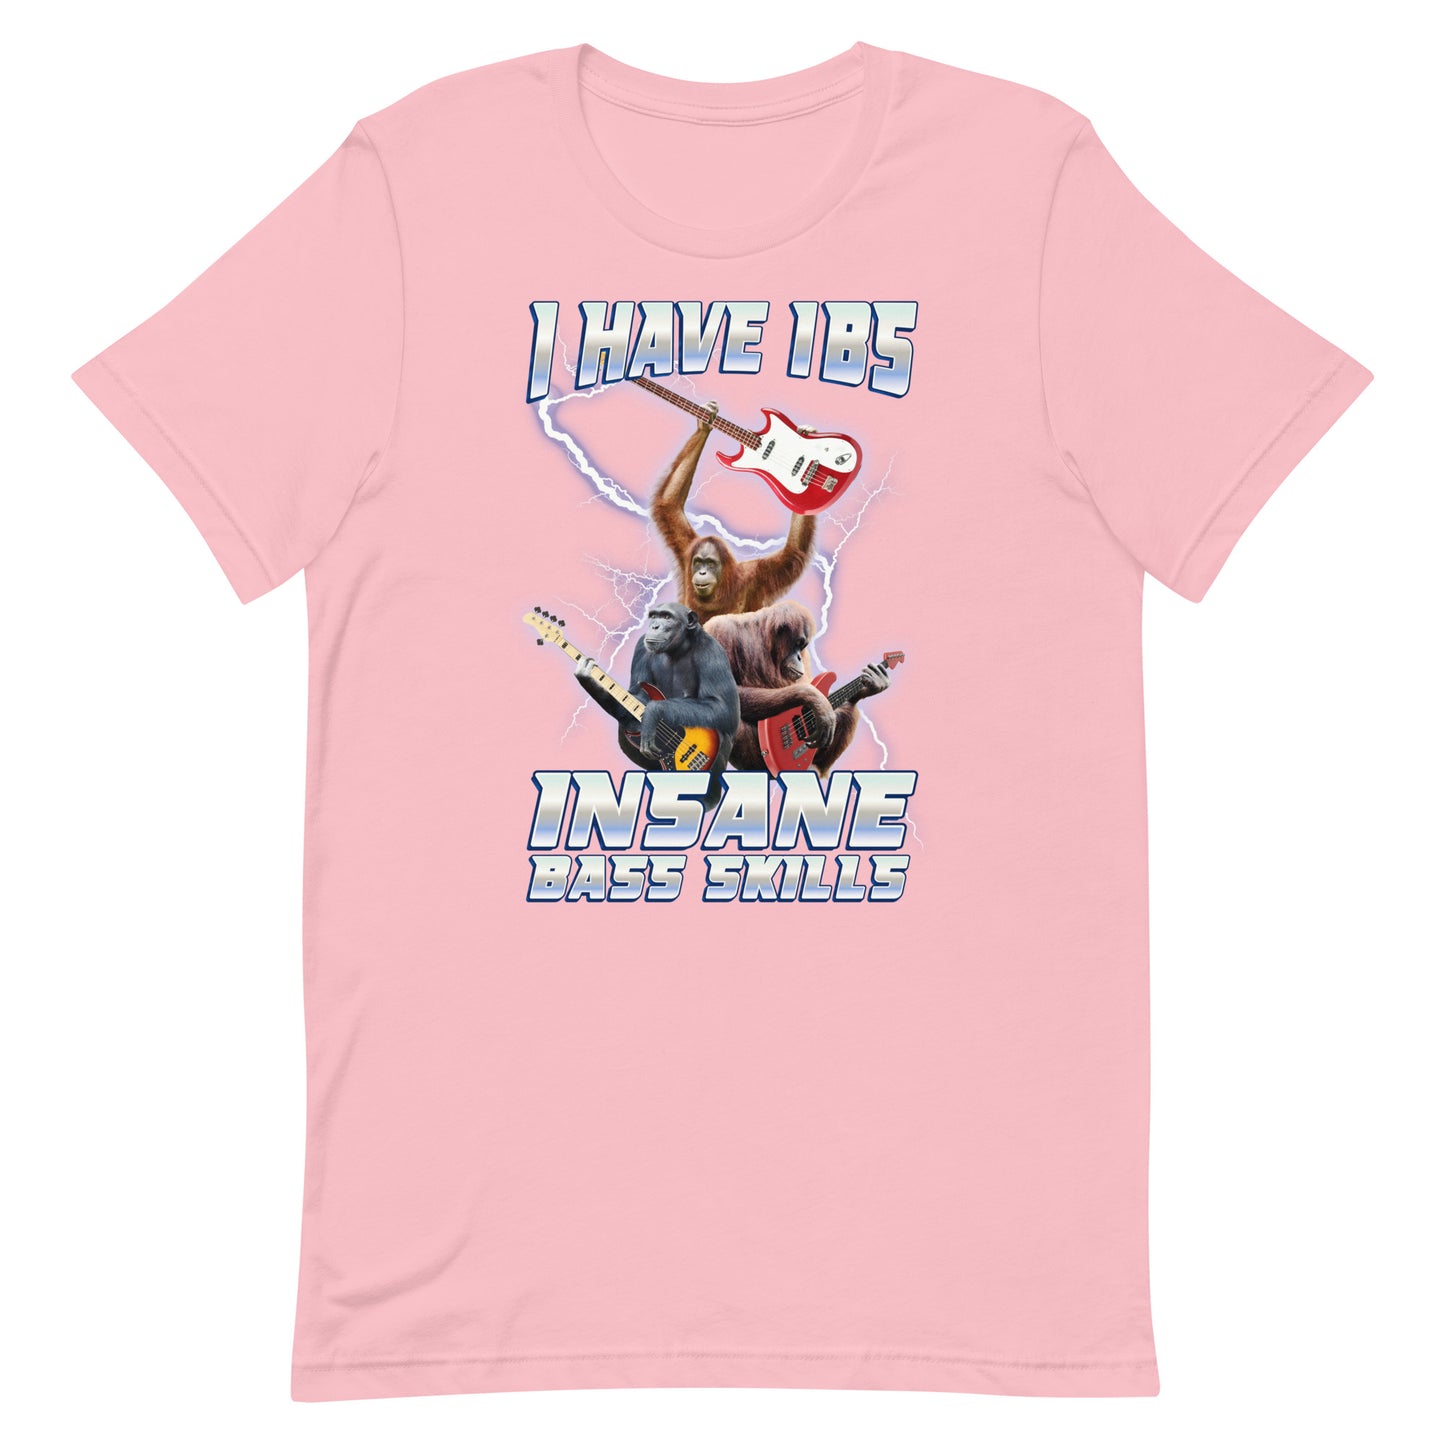 I Have IBS (Insane Bass Skills) Unisex t-shirt